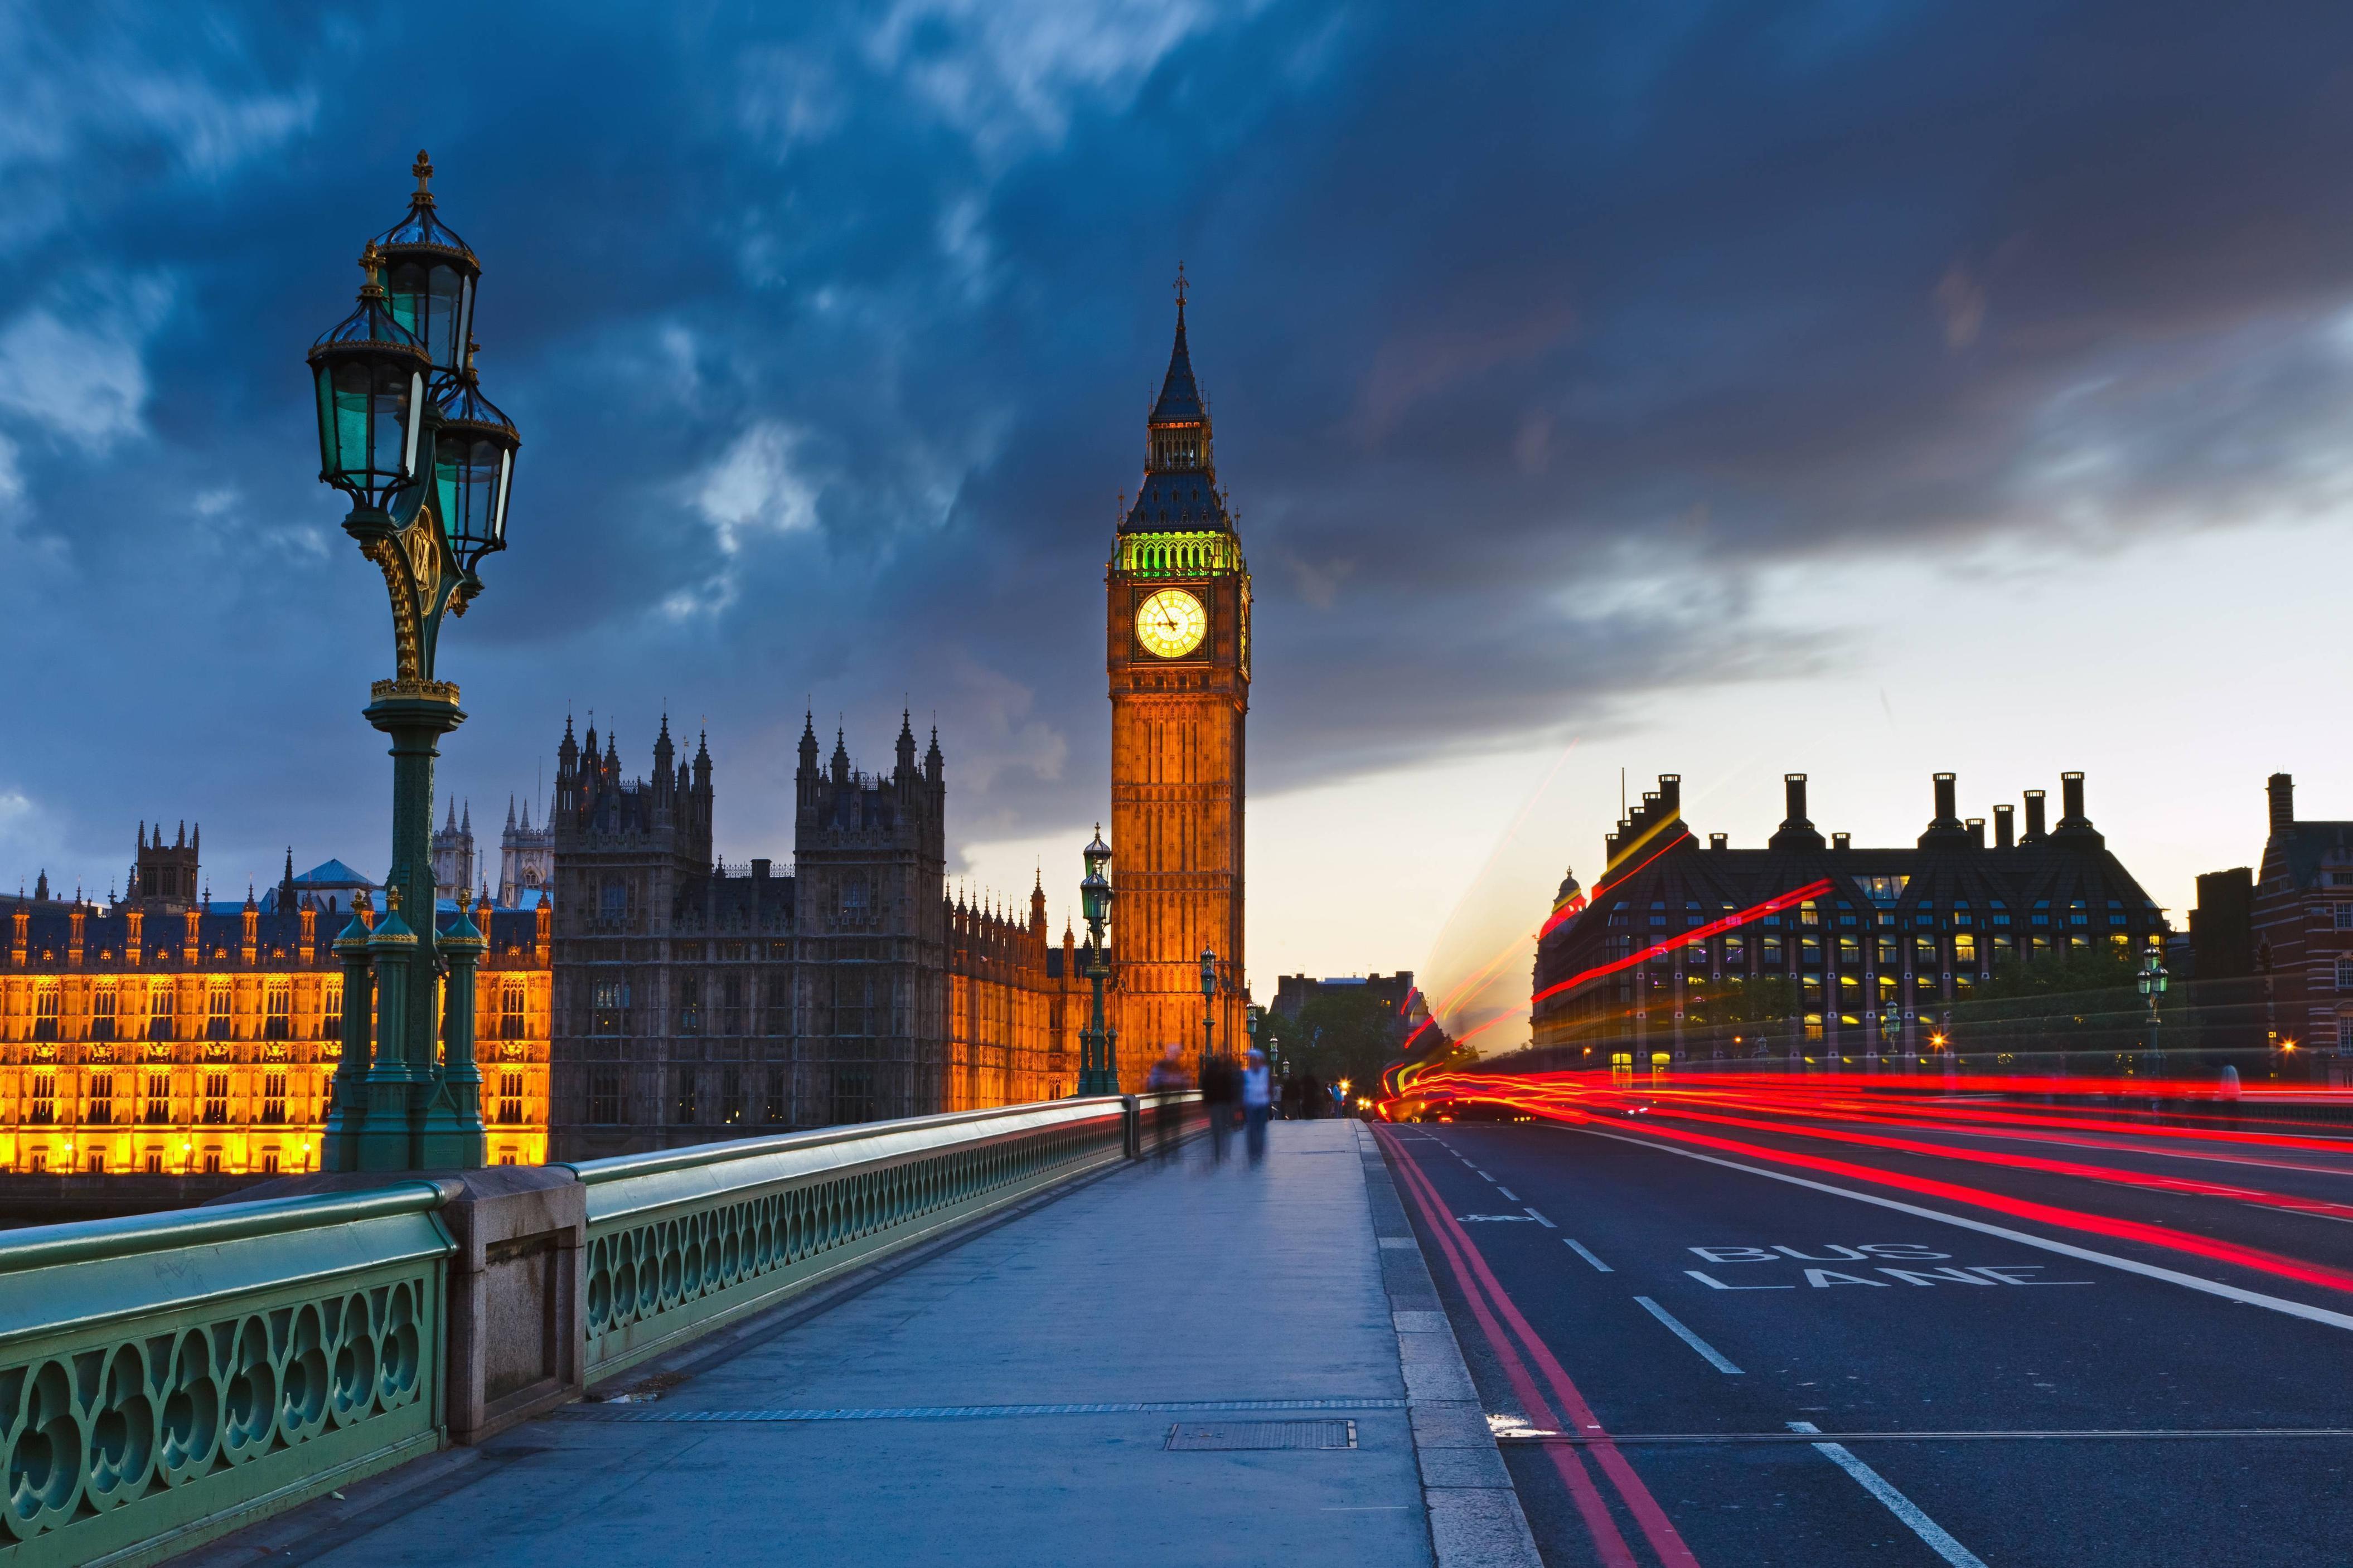 London At Night Desktop Wallpapers Download Wallpapers Big Ben At